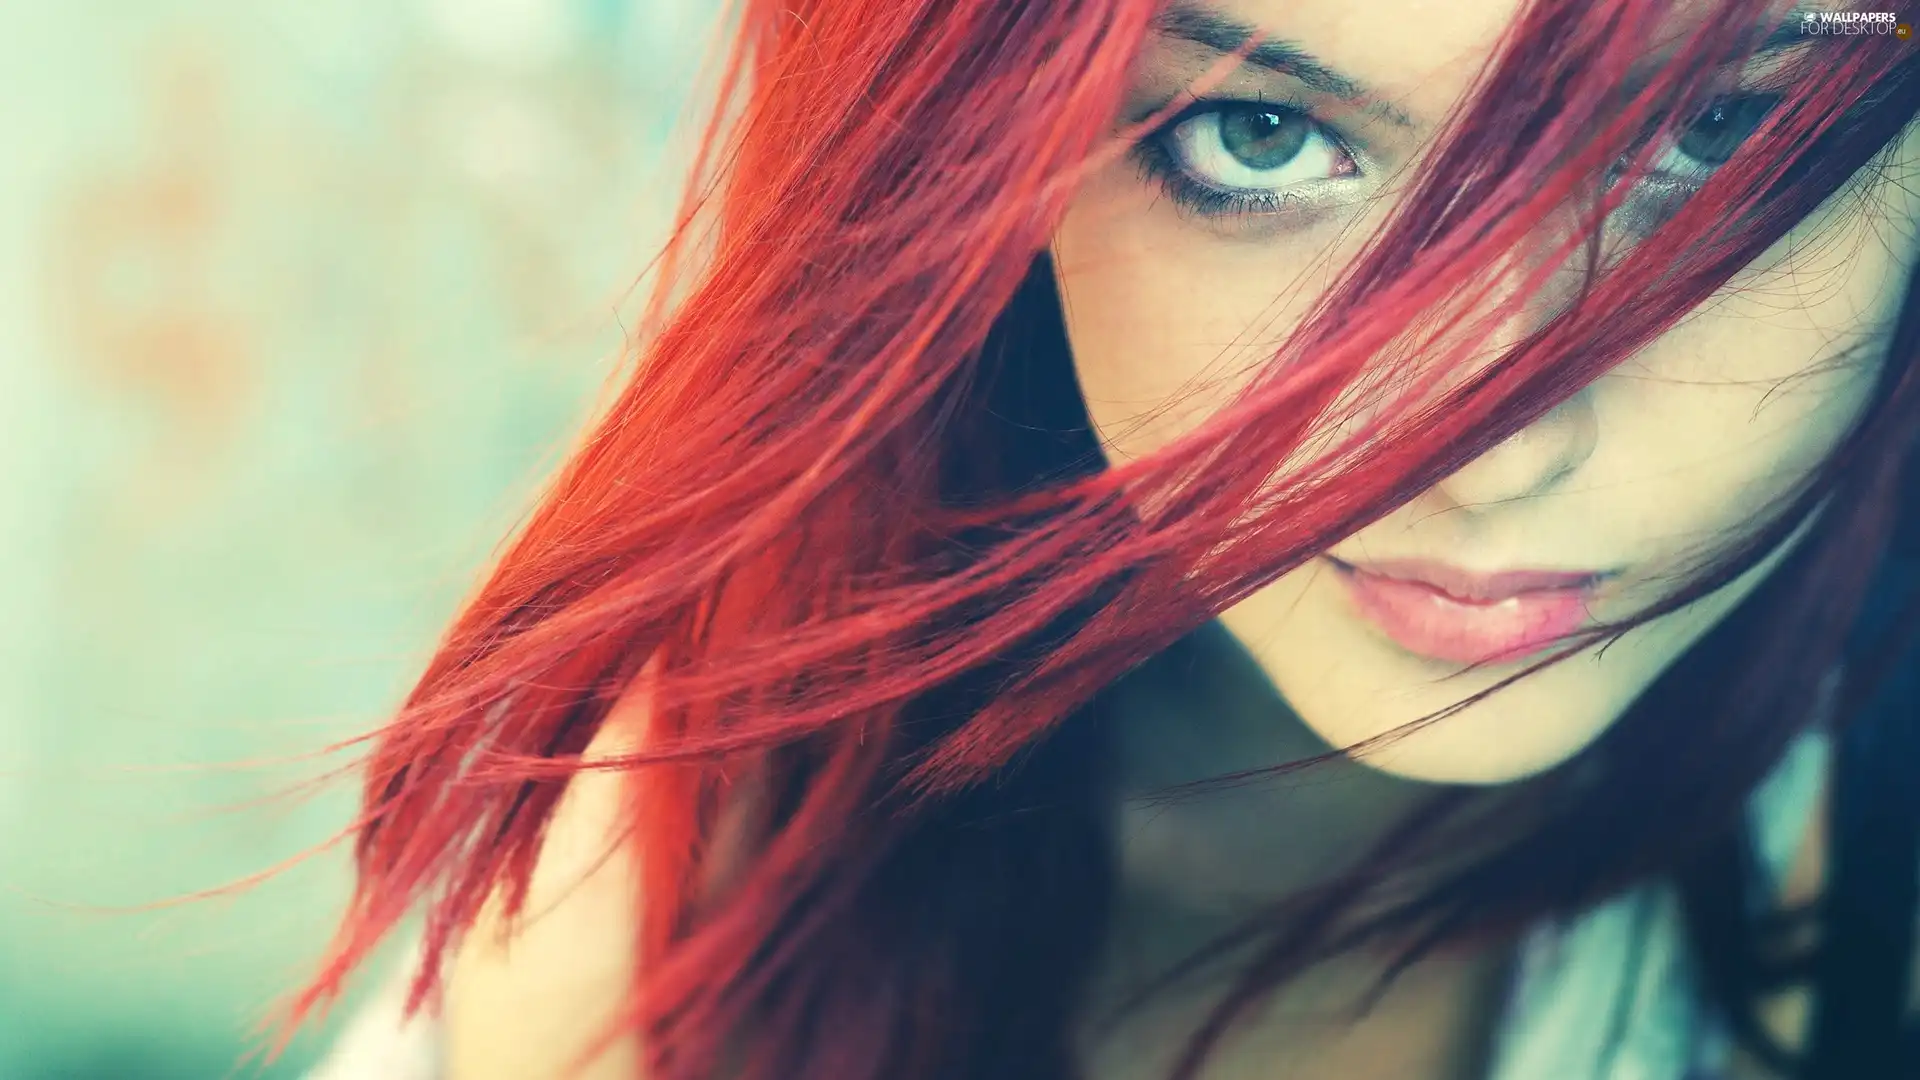 dispelled, Hair, Women, red head, Beauty